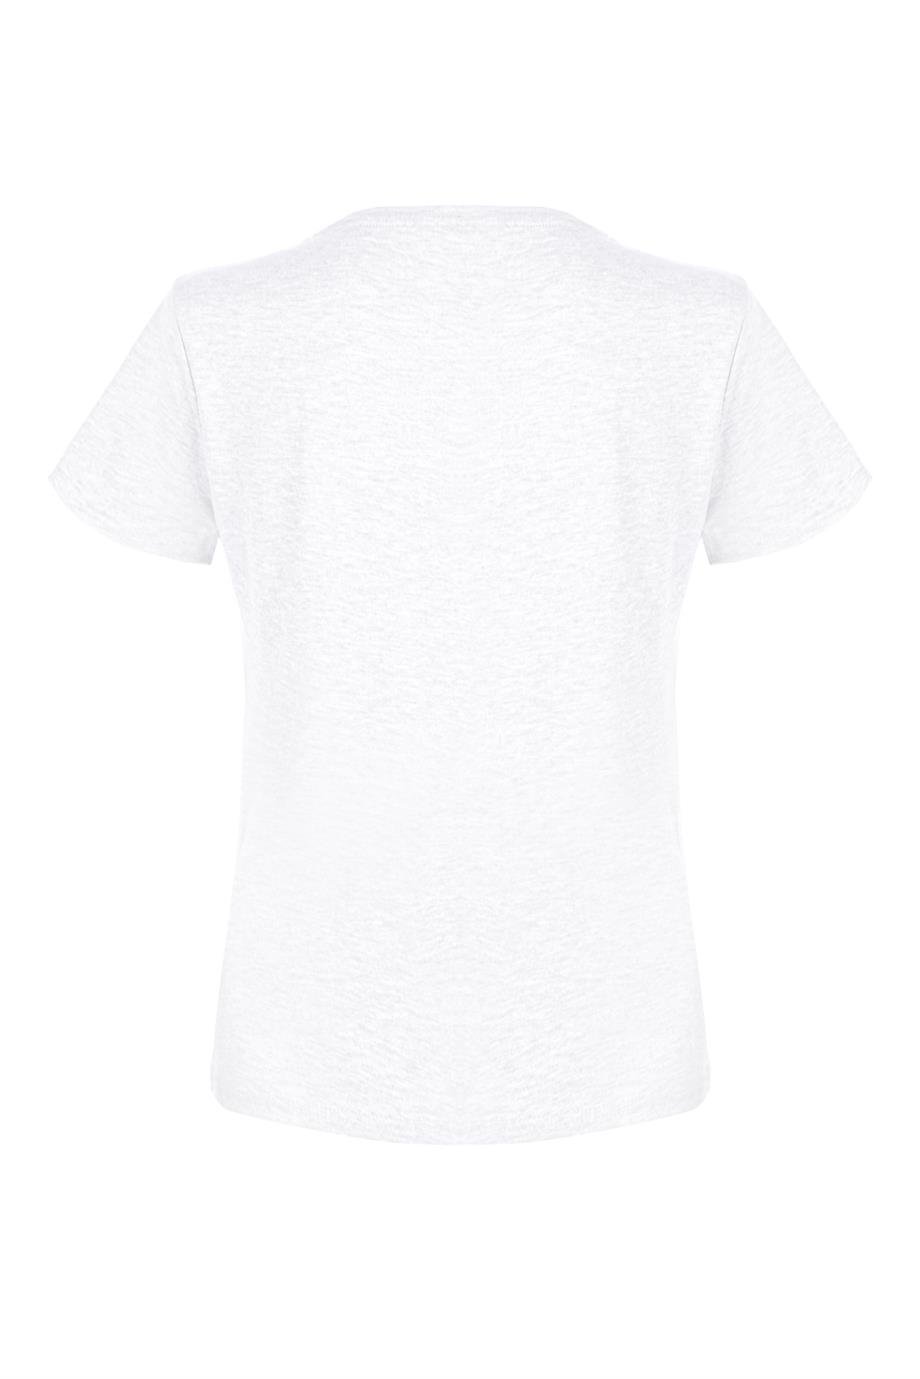 Açık Bisiklet Yaka Beyaz Erkek T-Shirt - DZN8702